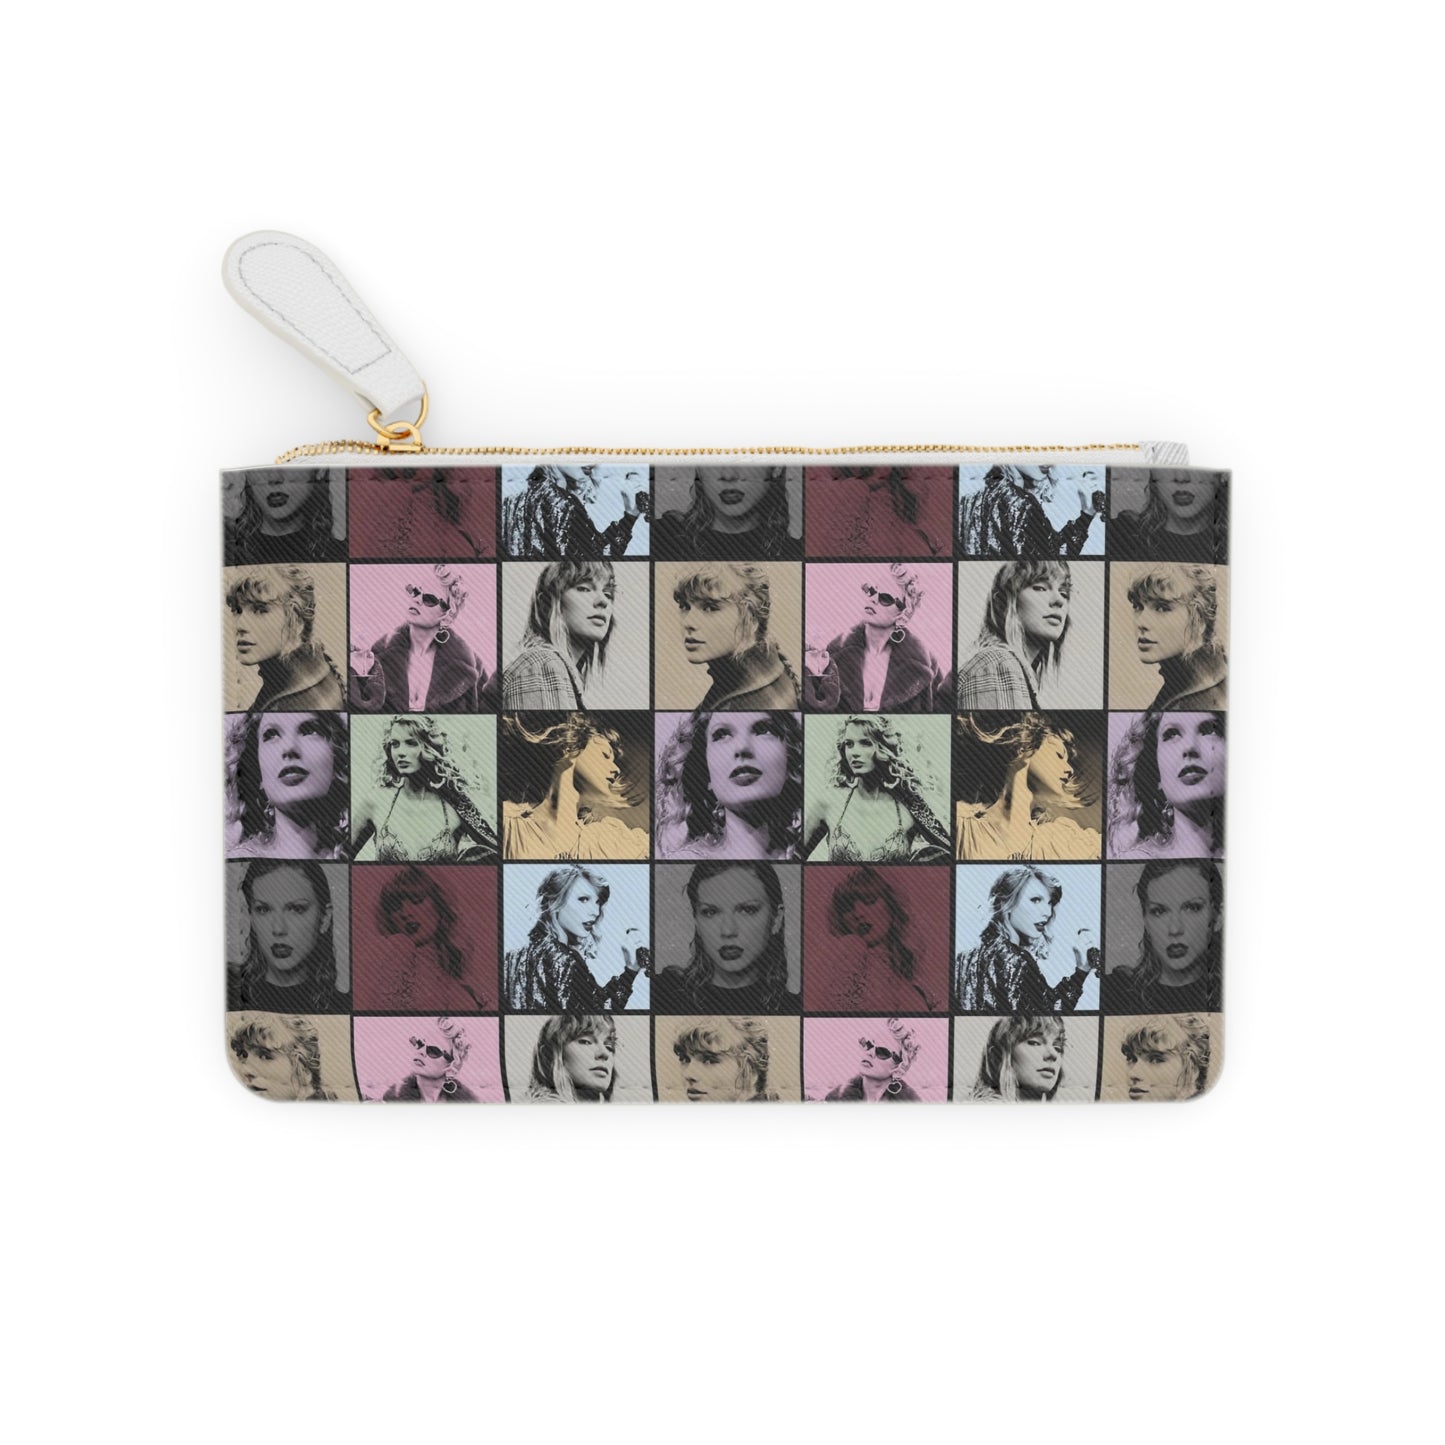 Taylor Swift Eras Collage Mini Clutch Bag